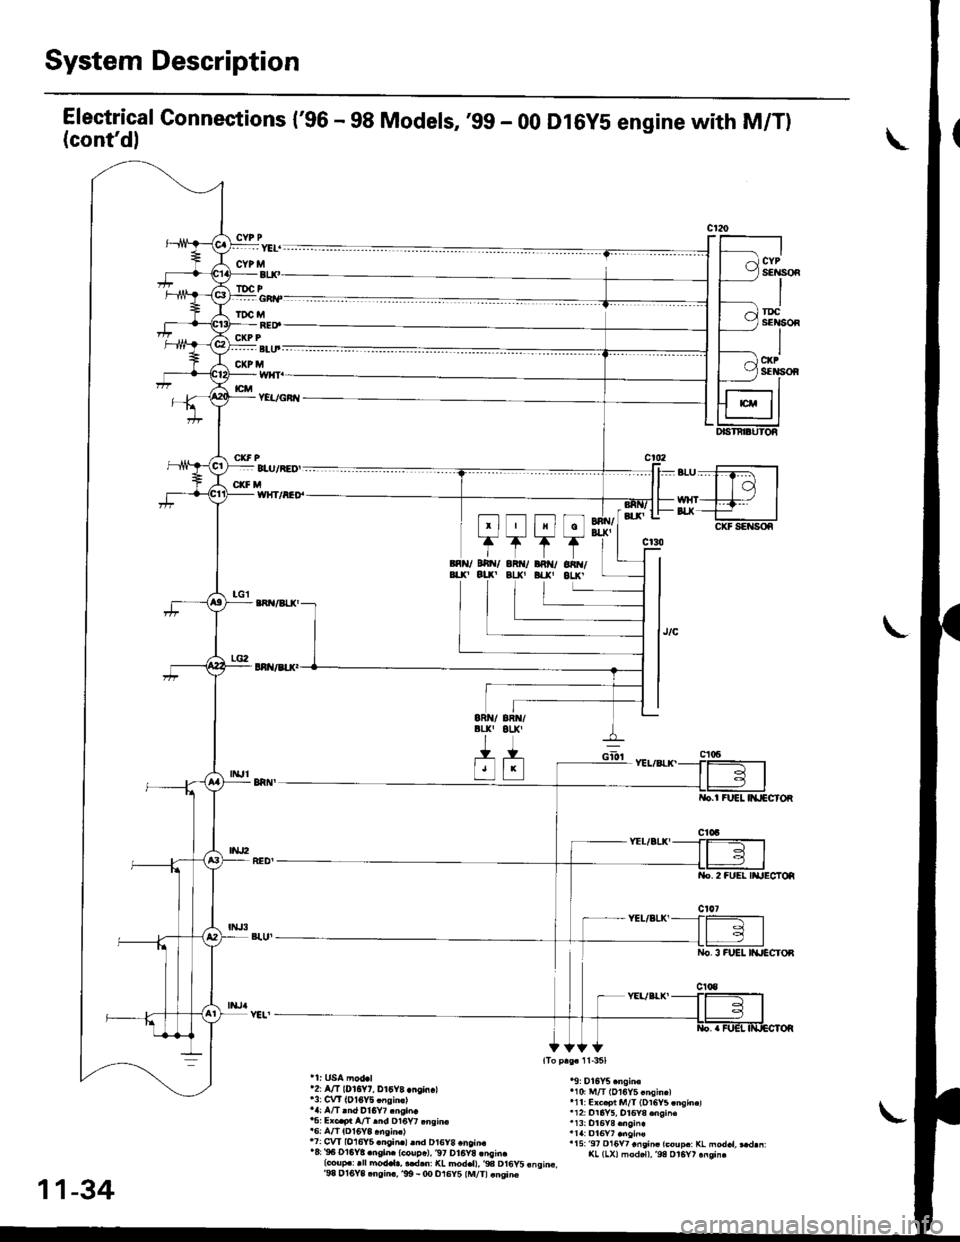 HONDA CIVIC 1998 6.G User Guide System Description
Electrical Connestions {96 - gB Models, ,99 - 00 Dl6yS engine with M/T)(contdl
rDic M
ct(P P
CXP M
RET
YEUGifl
CIG M
\
lhx/ALJ(I
&llAL:]
12: A/t tD16Yt, Dt0Y8.ncin.t13: C1/t lDt